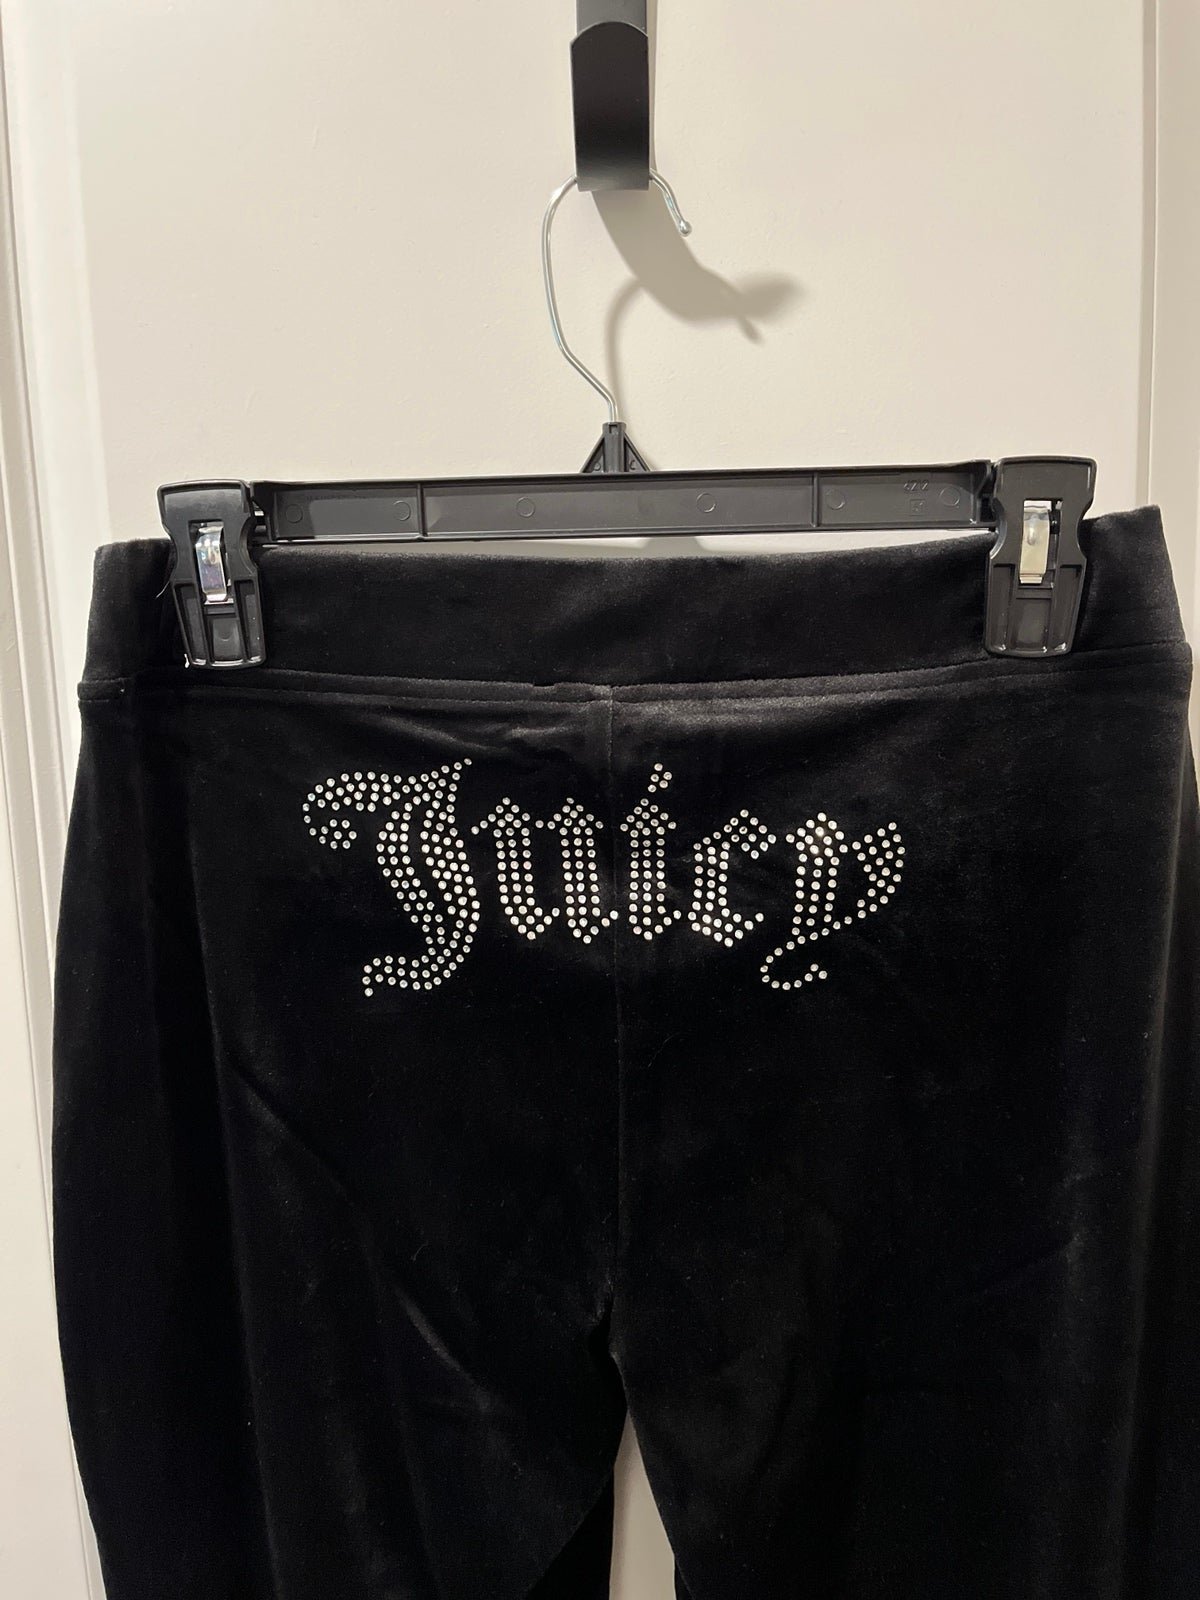 Amazing Juicy Couture pants IbON9FFma Fashion